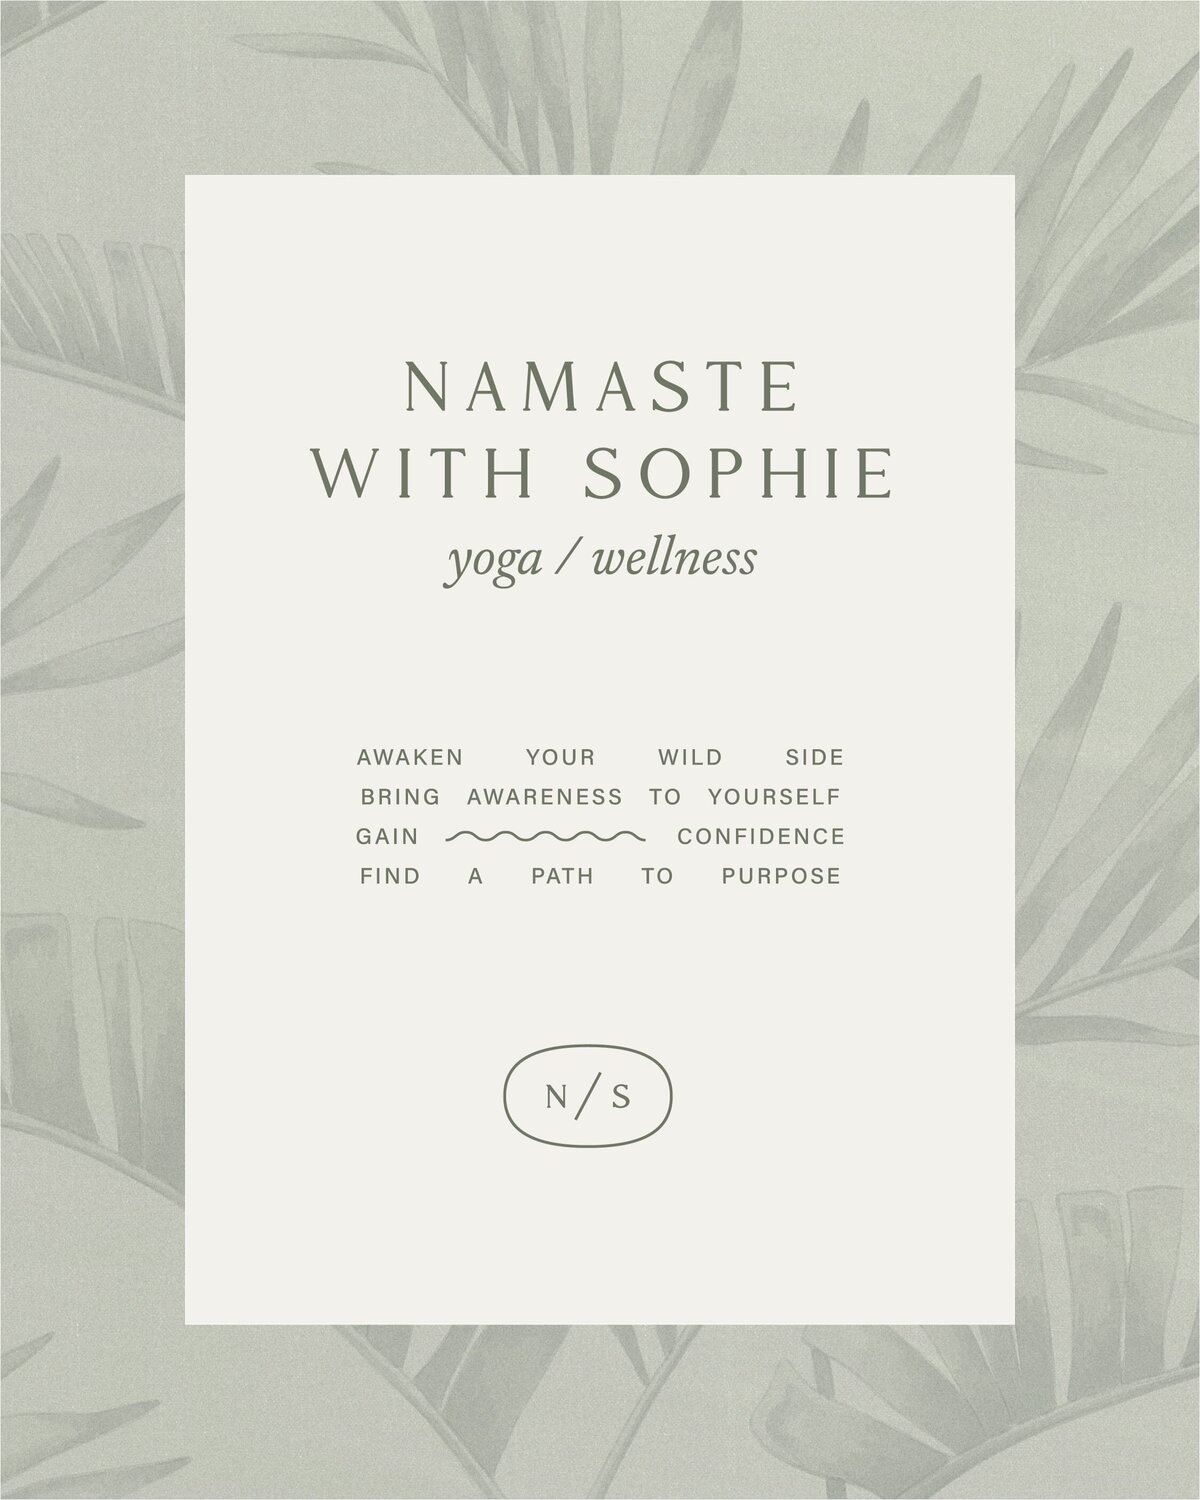 NamasteWithSophie_LaunchGraphics_Instagram34